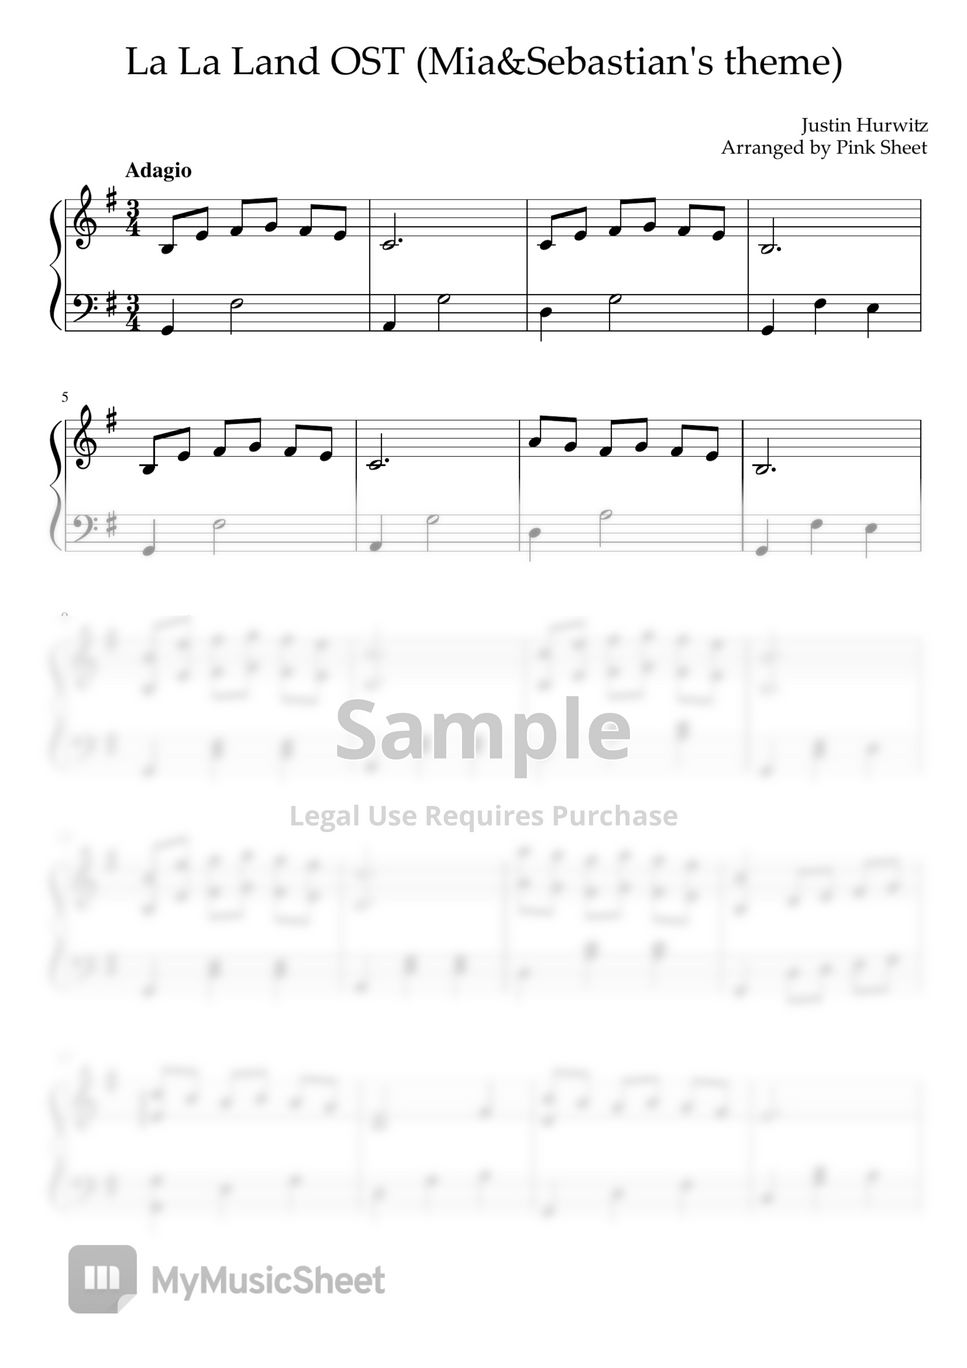 Justin Hurwitz - La La Land OST (Mia&Sebastian's theme) Sheets by Pink ...